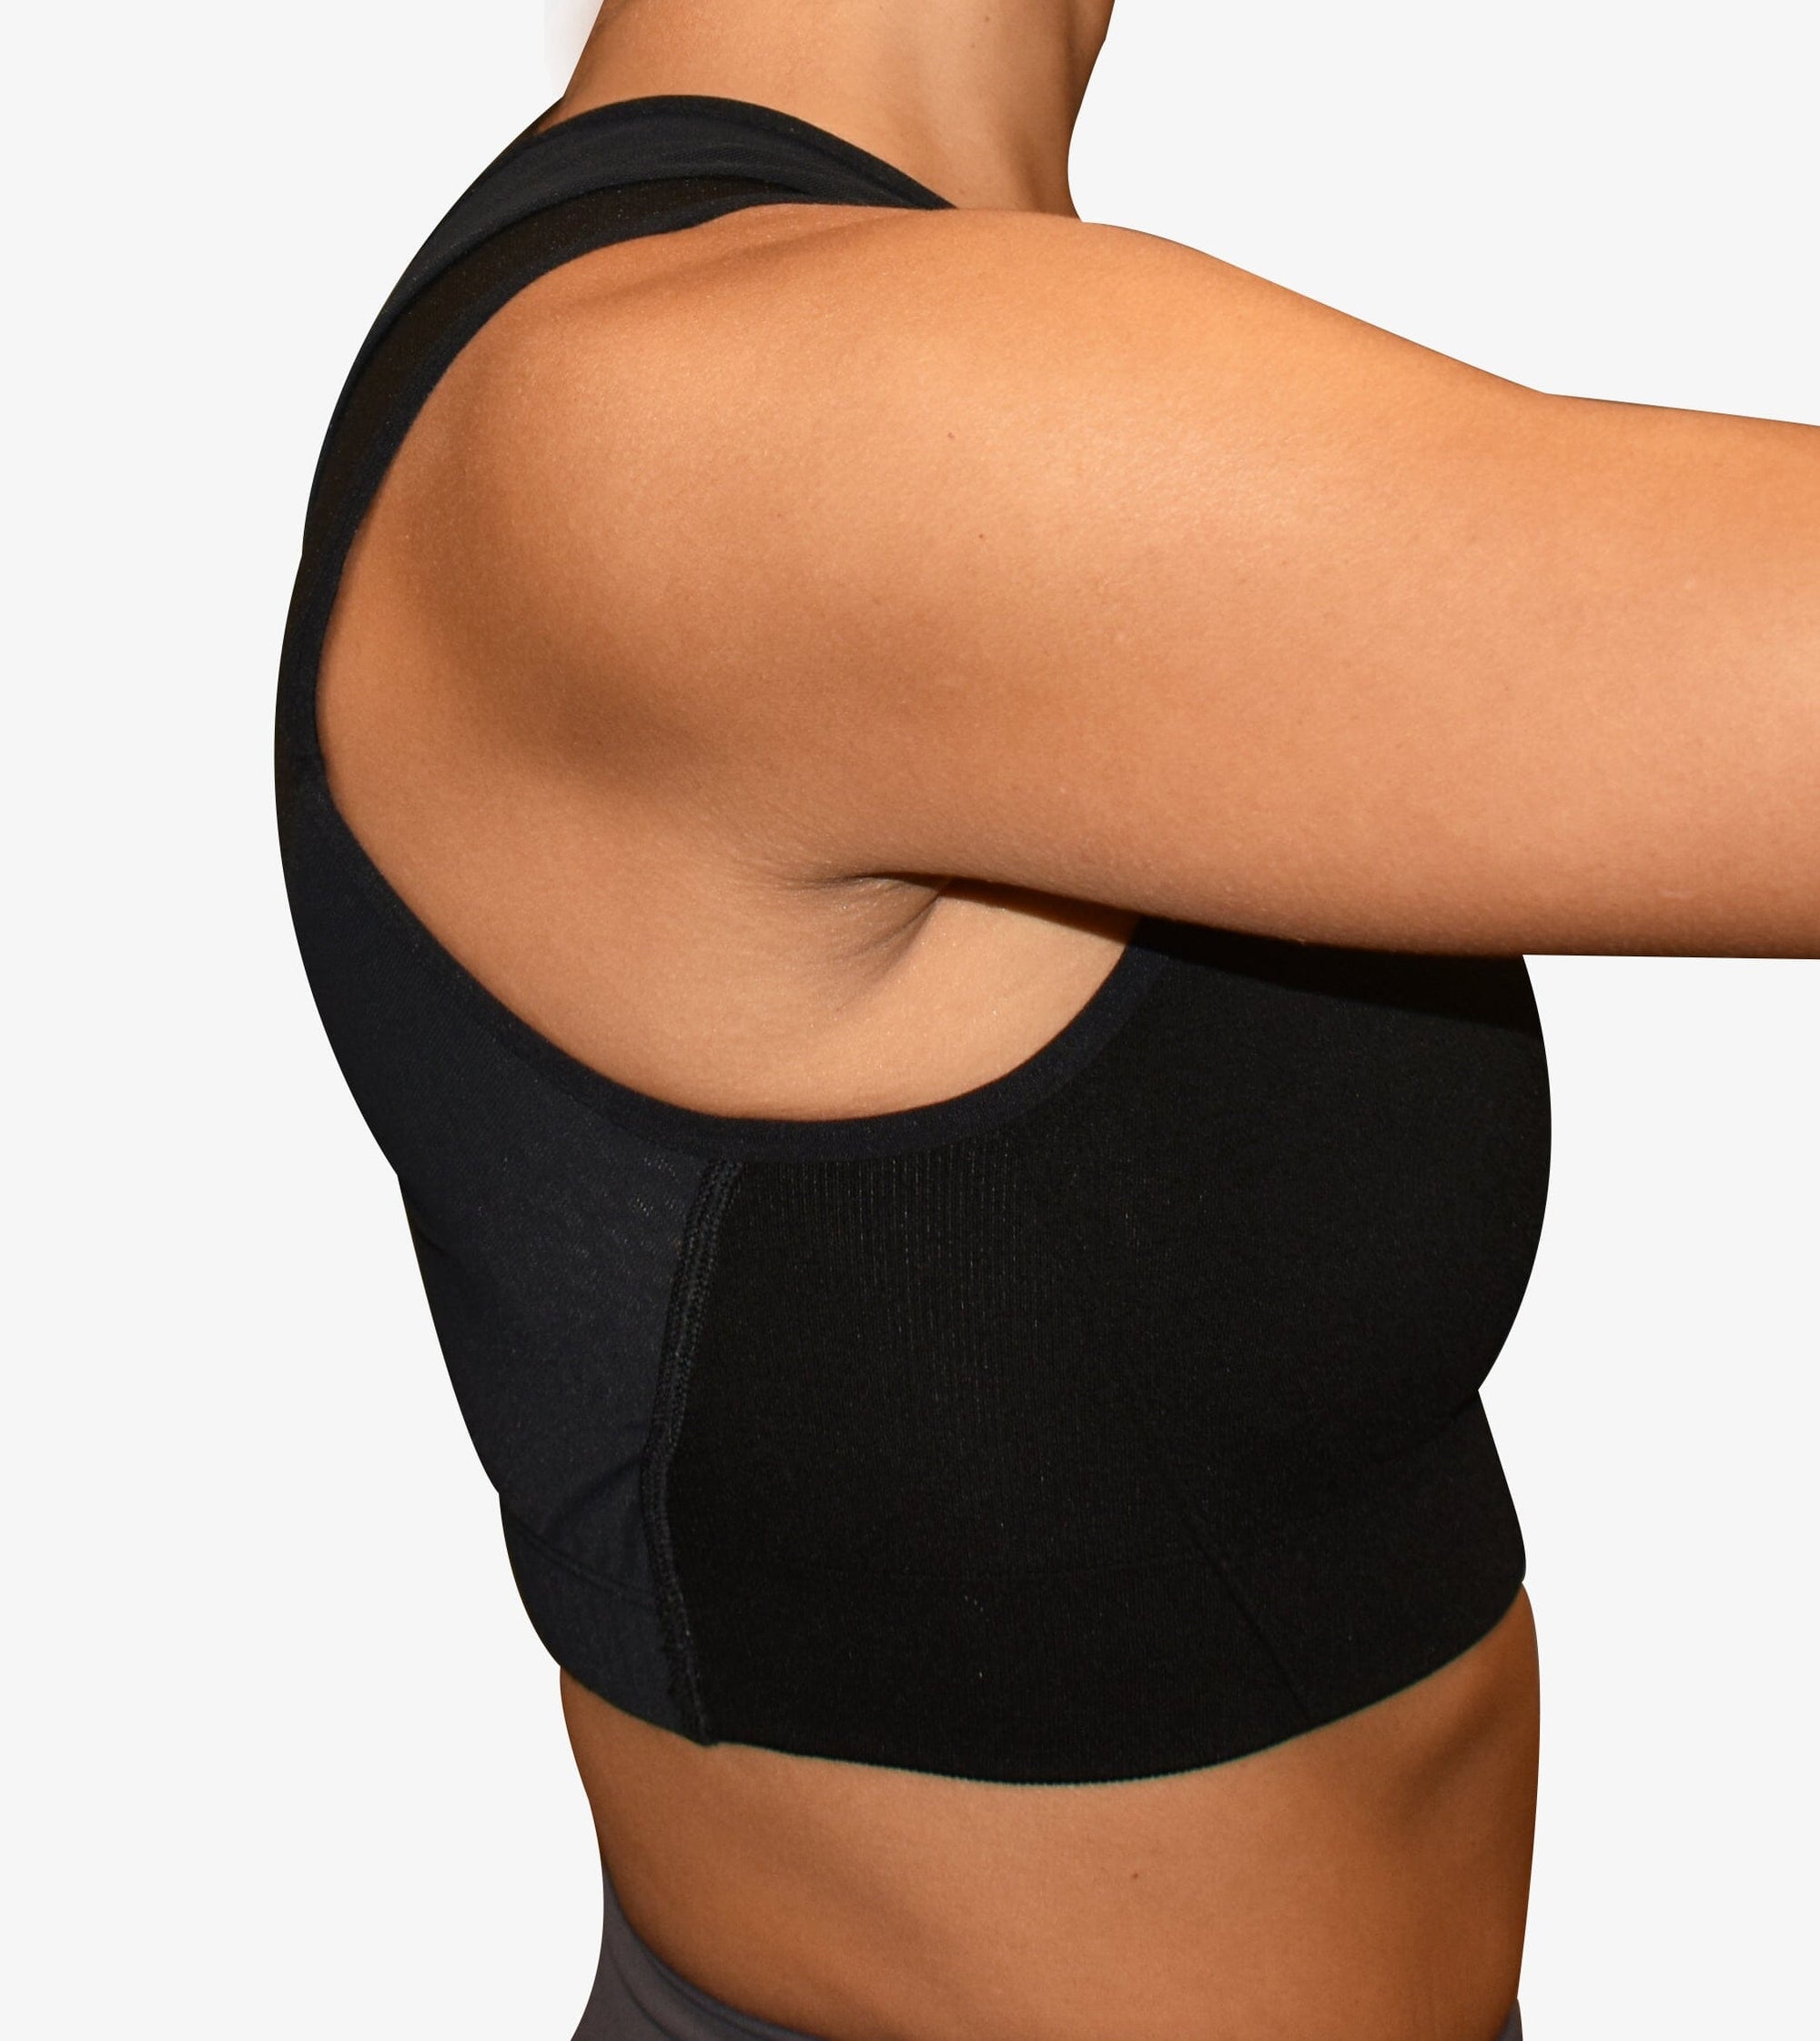 mveomtd women's full coverage front closure wire back support posture bra  sports bras for women cotton beige m